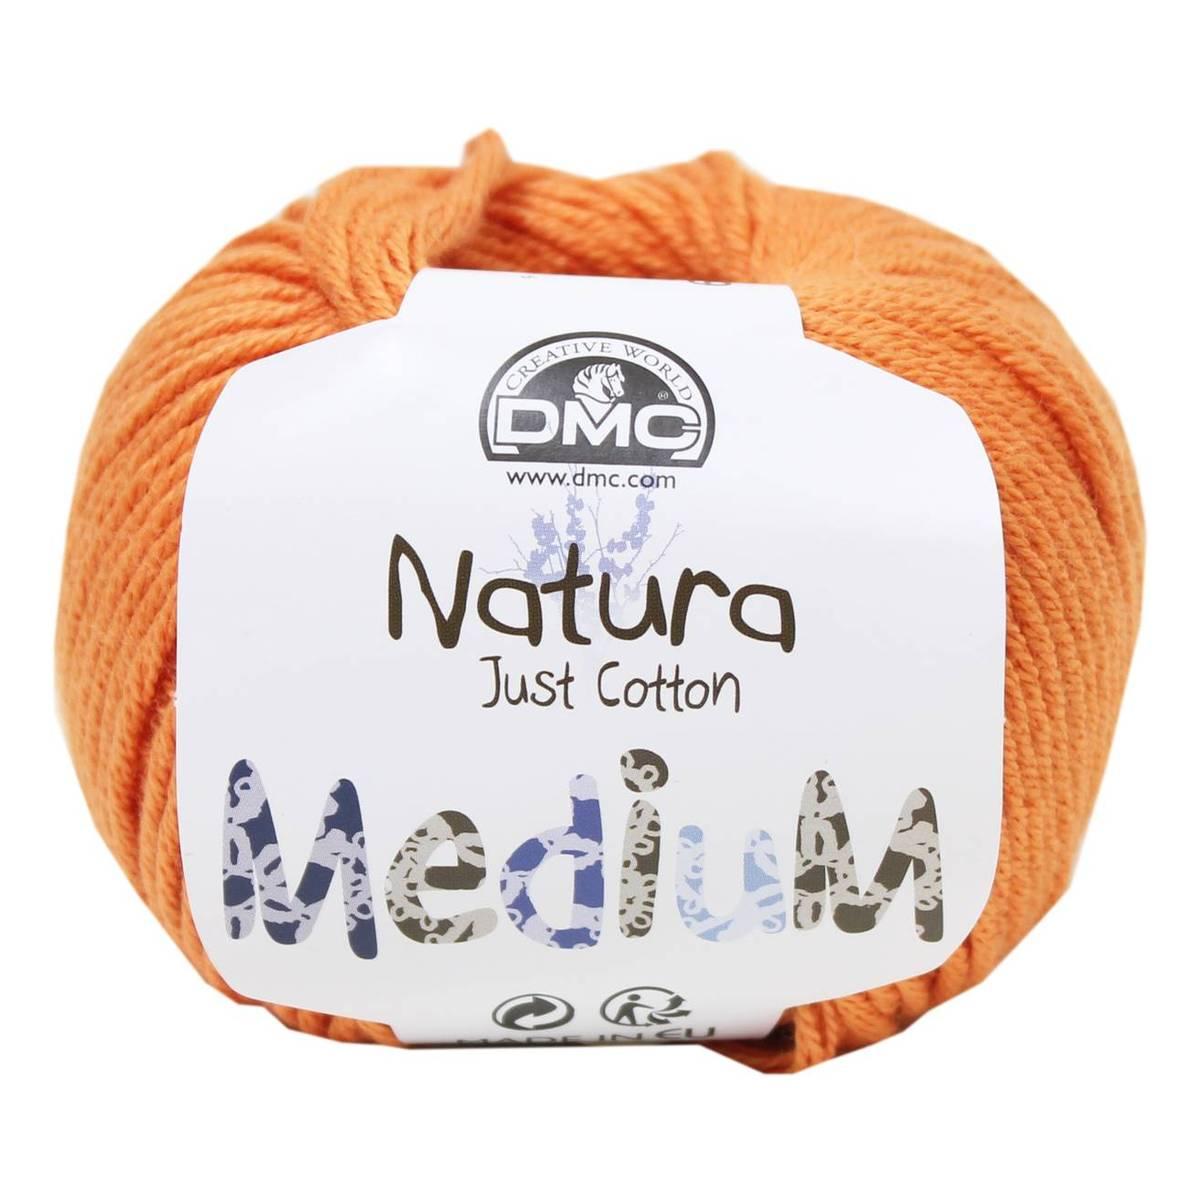 Crochet Yarn, Cotton Yarn, DMC Natura Just Cotton Yarn, Yummy Colours,  Knitting Yarn, Amigurumi Yarn, Crochet Thread, Combed Cotton, Yarn 